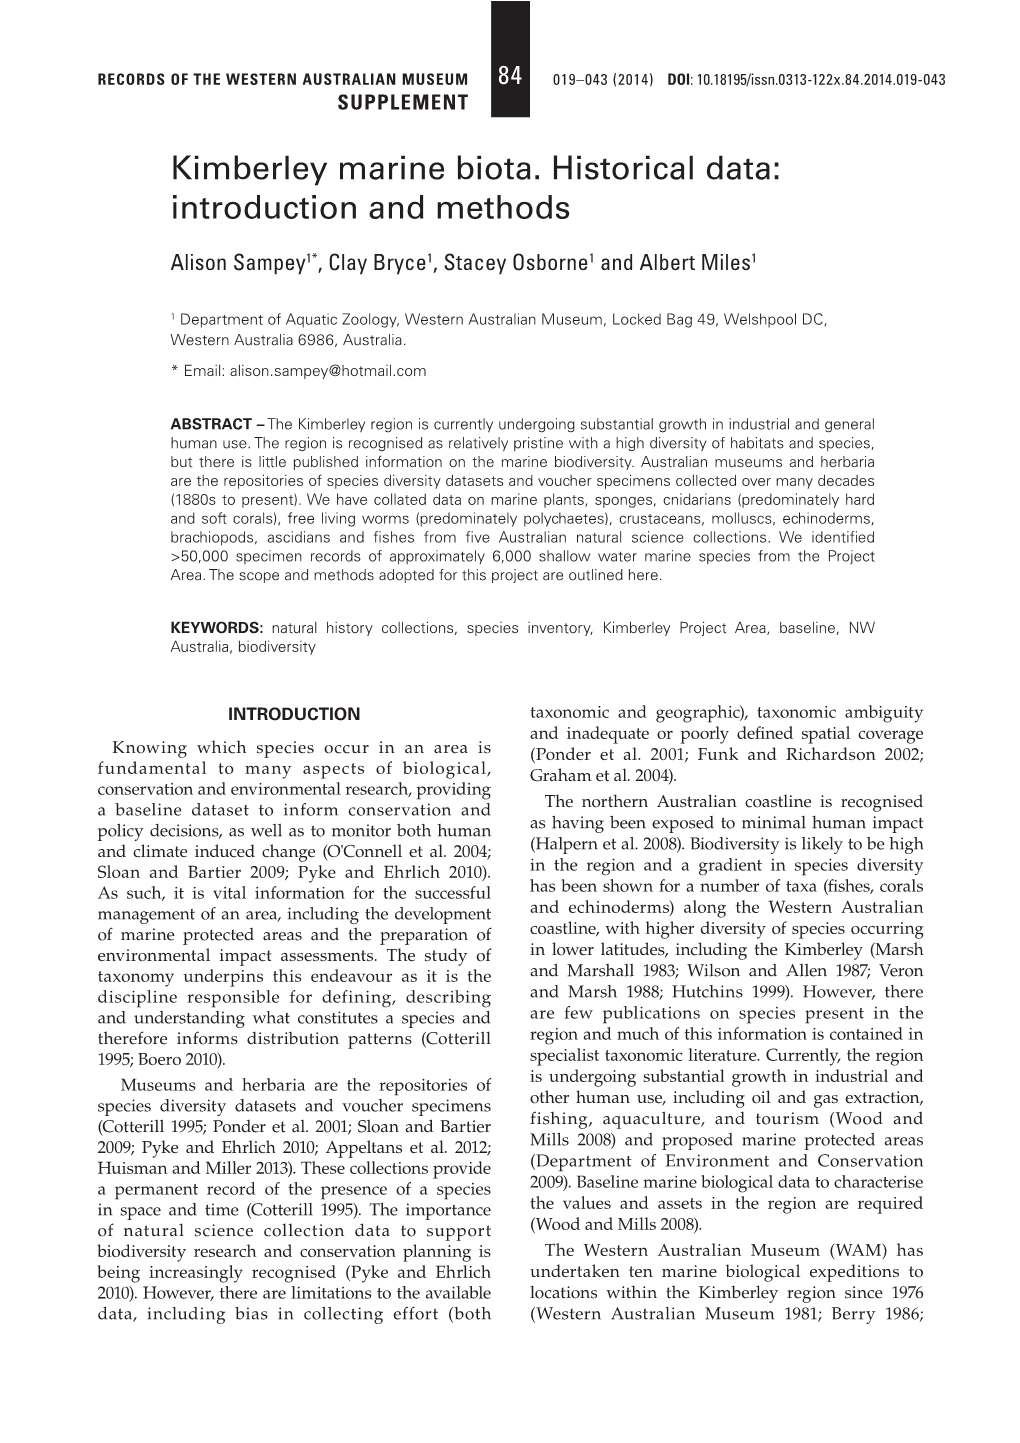 Kimberley Marine Biota. Historical Data: Introduction and Methods